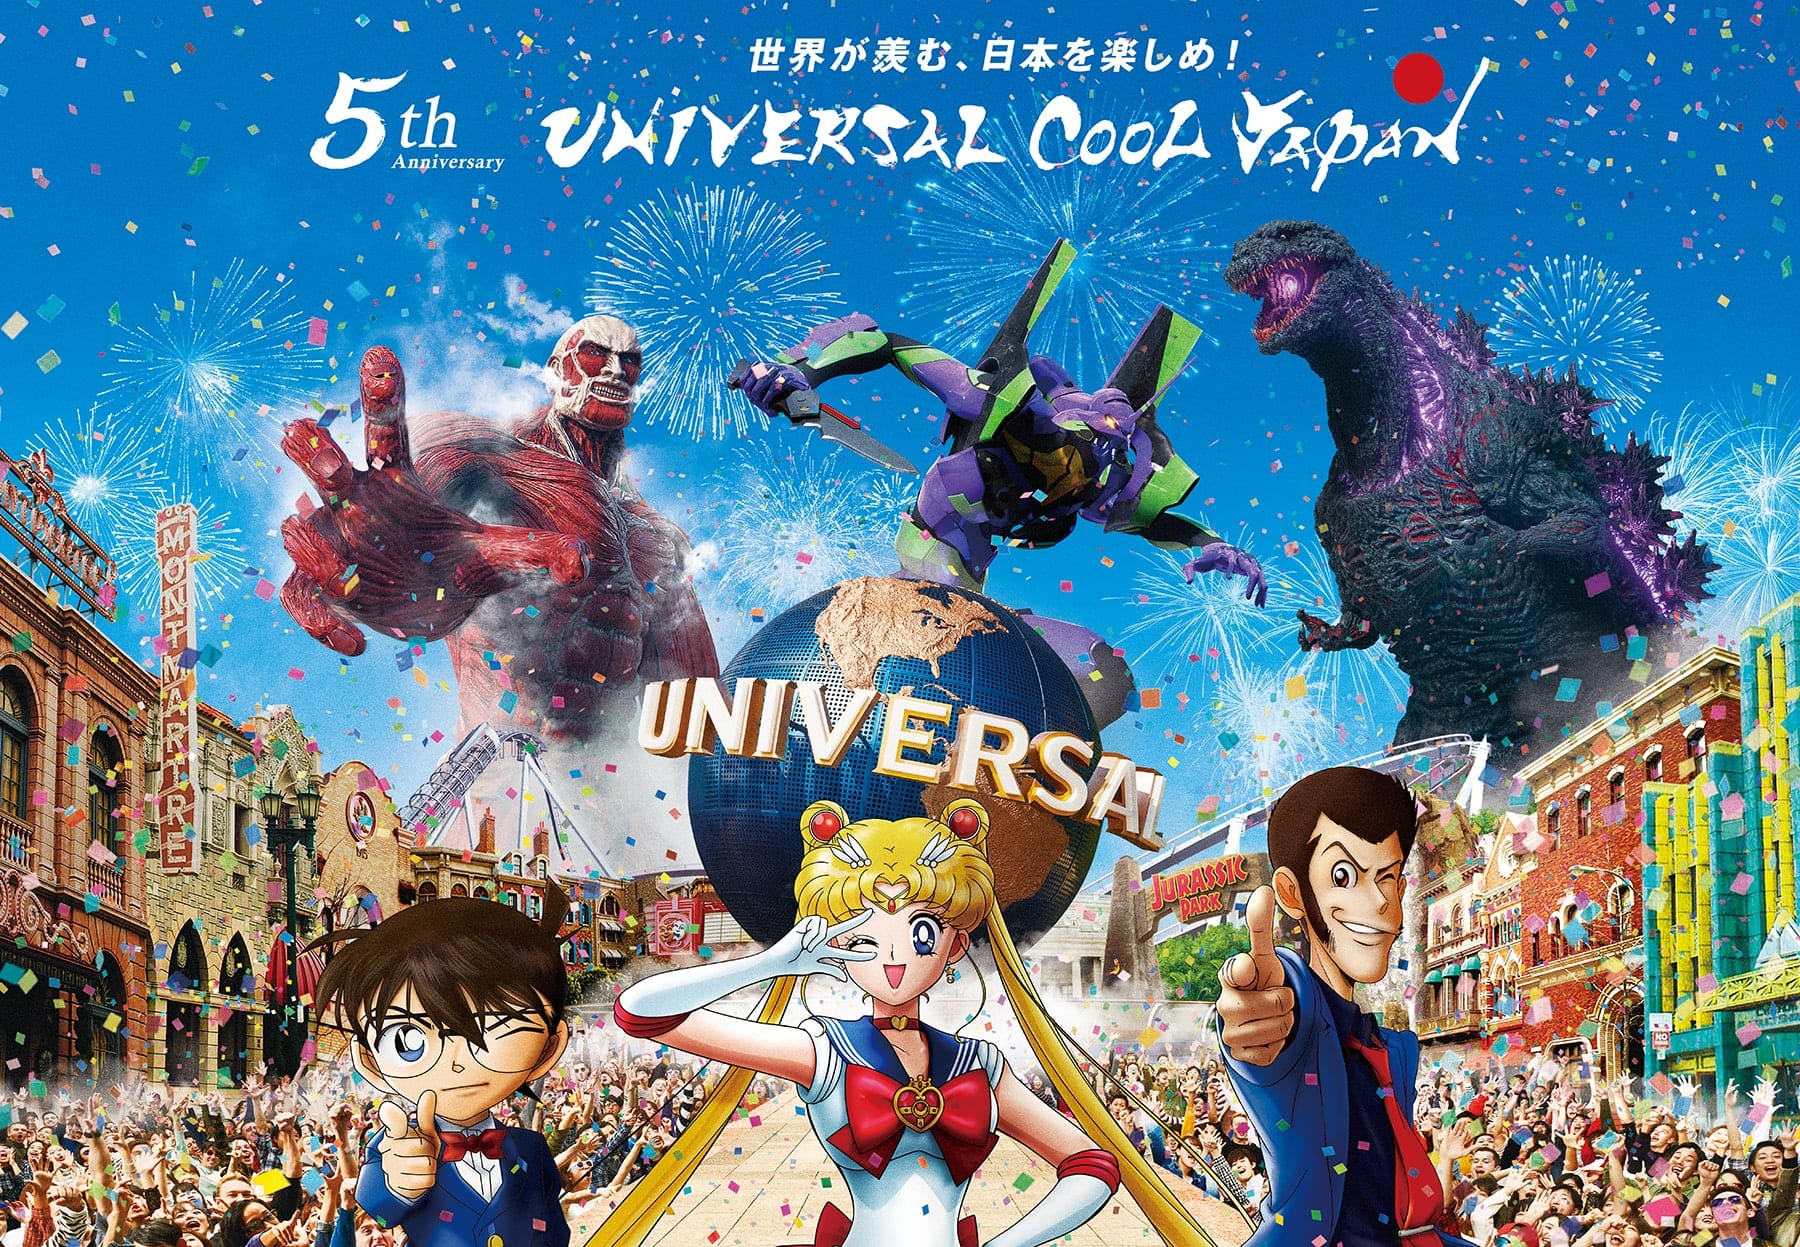 Universal Cool Japan 2019